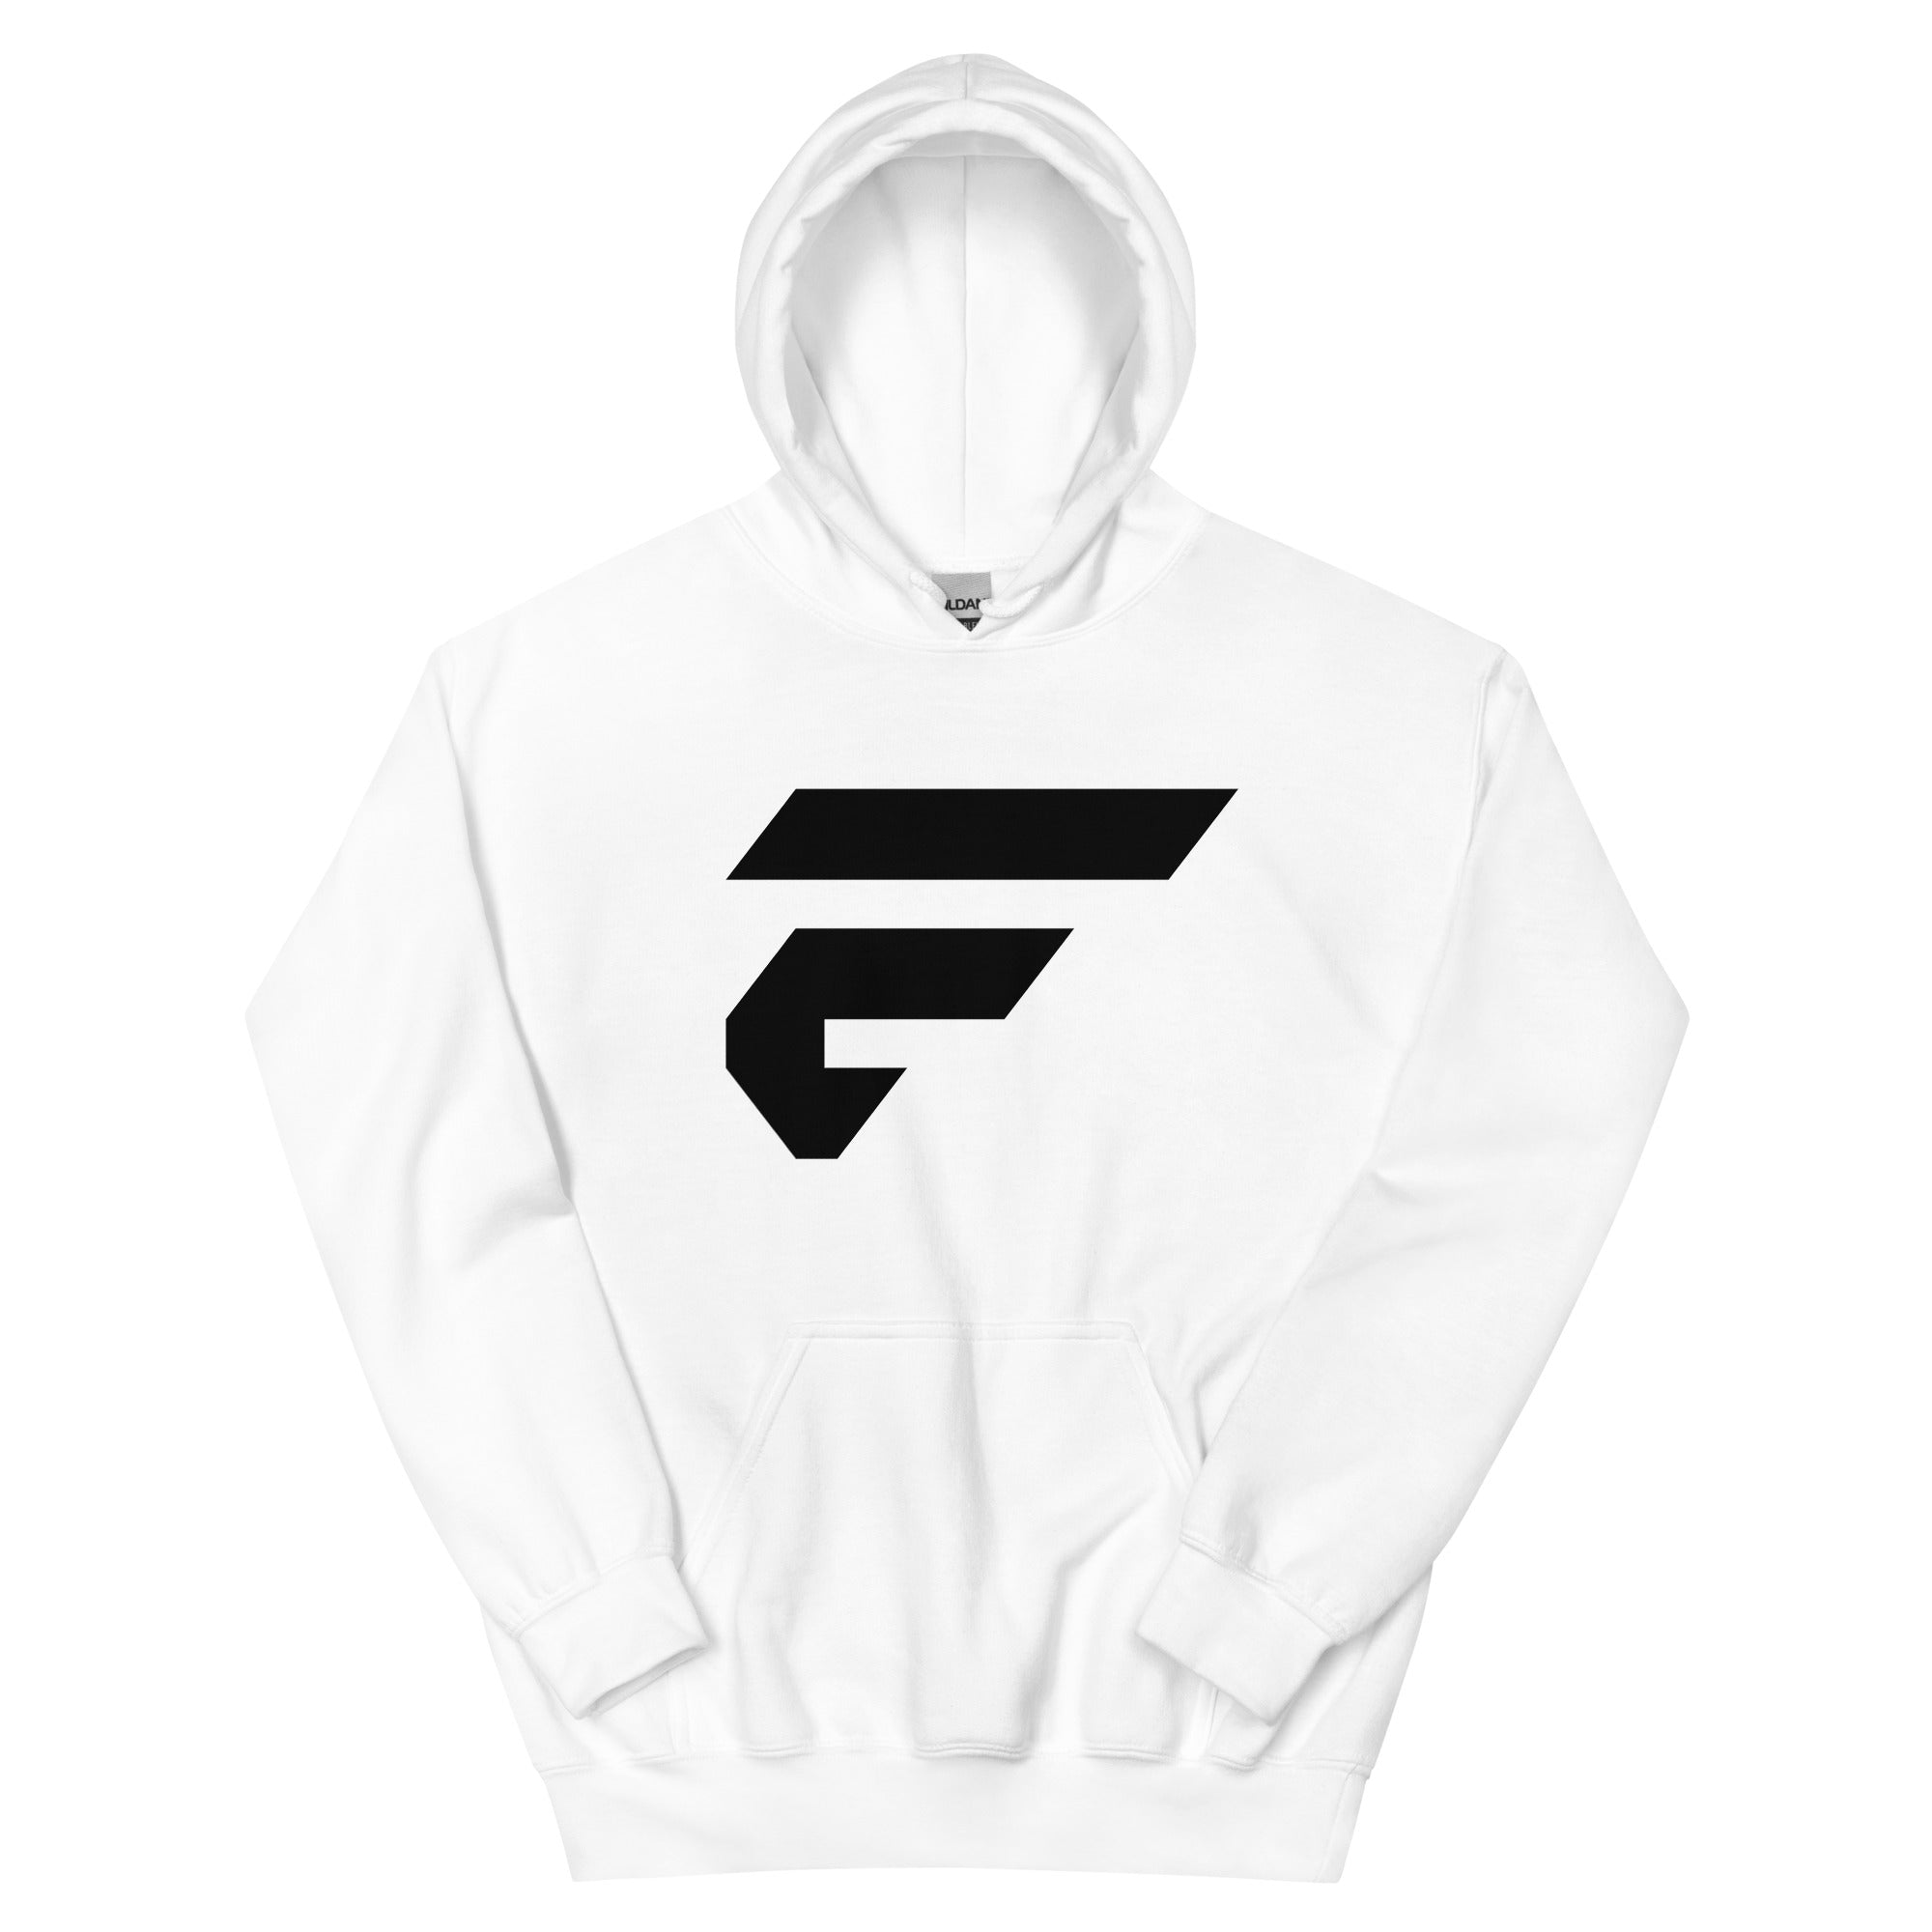 White unisex cotton hoodie with Fire Cornhole F logo in black